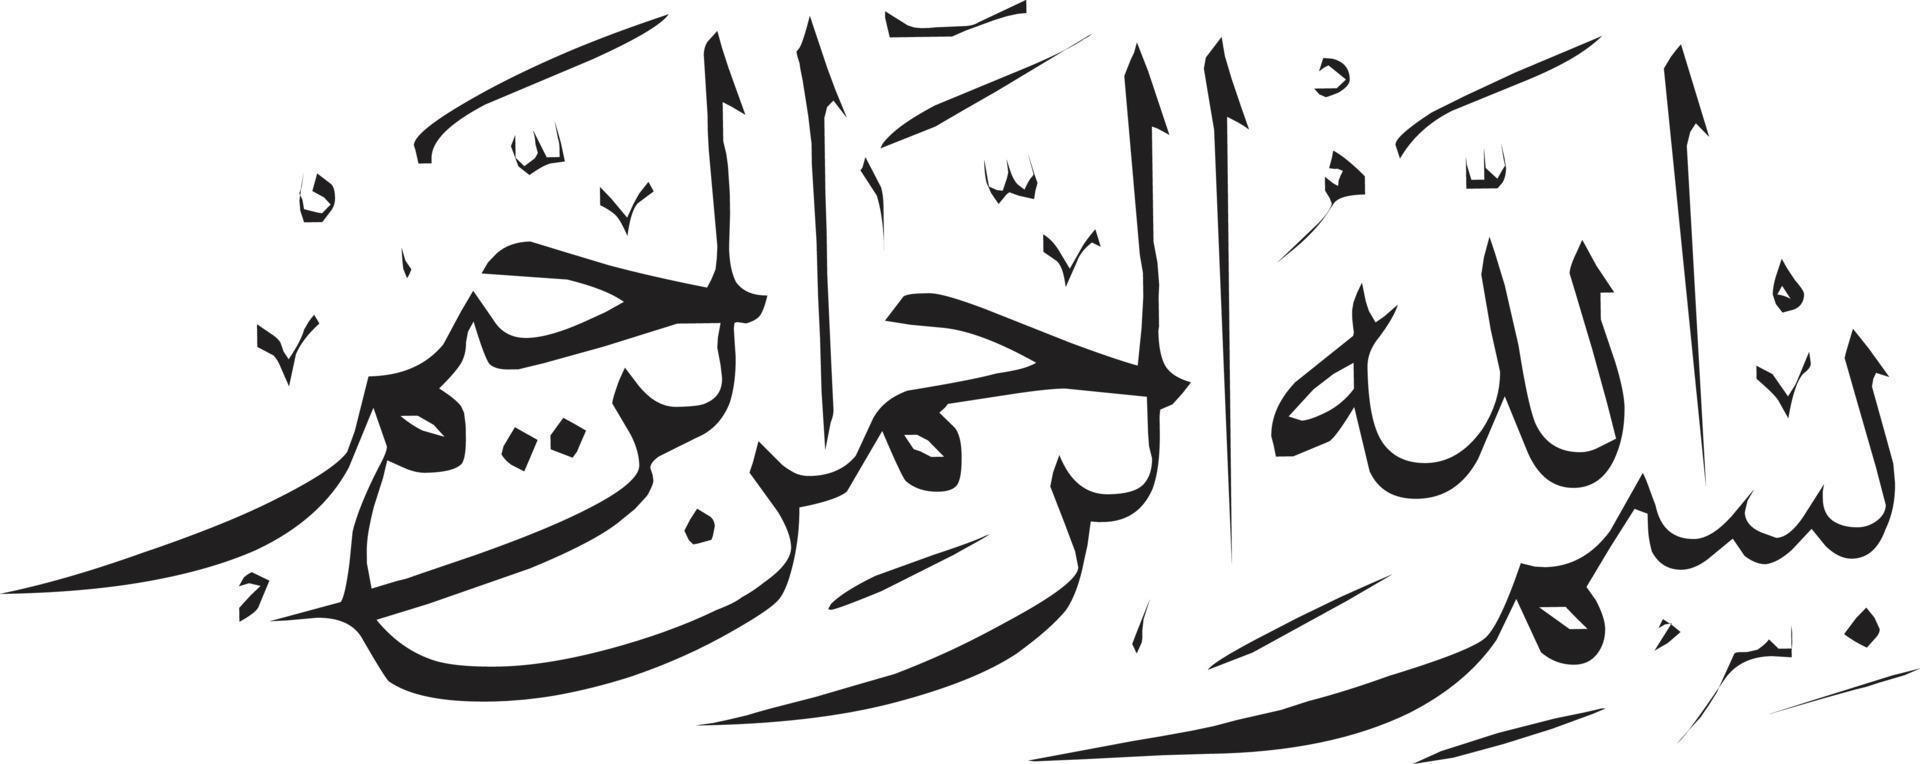 vector libre de caligrafía islámica bismila urdu